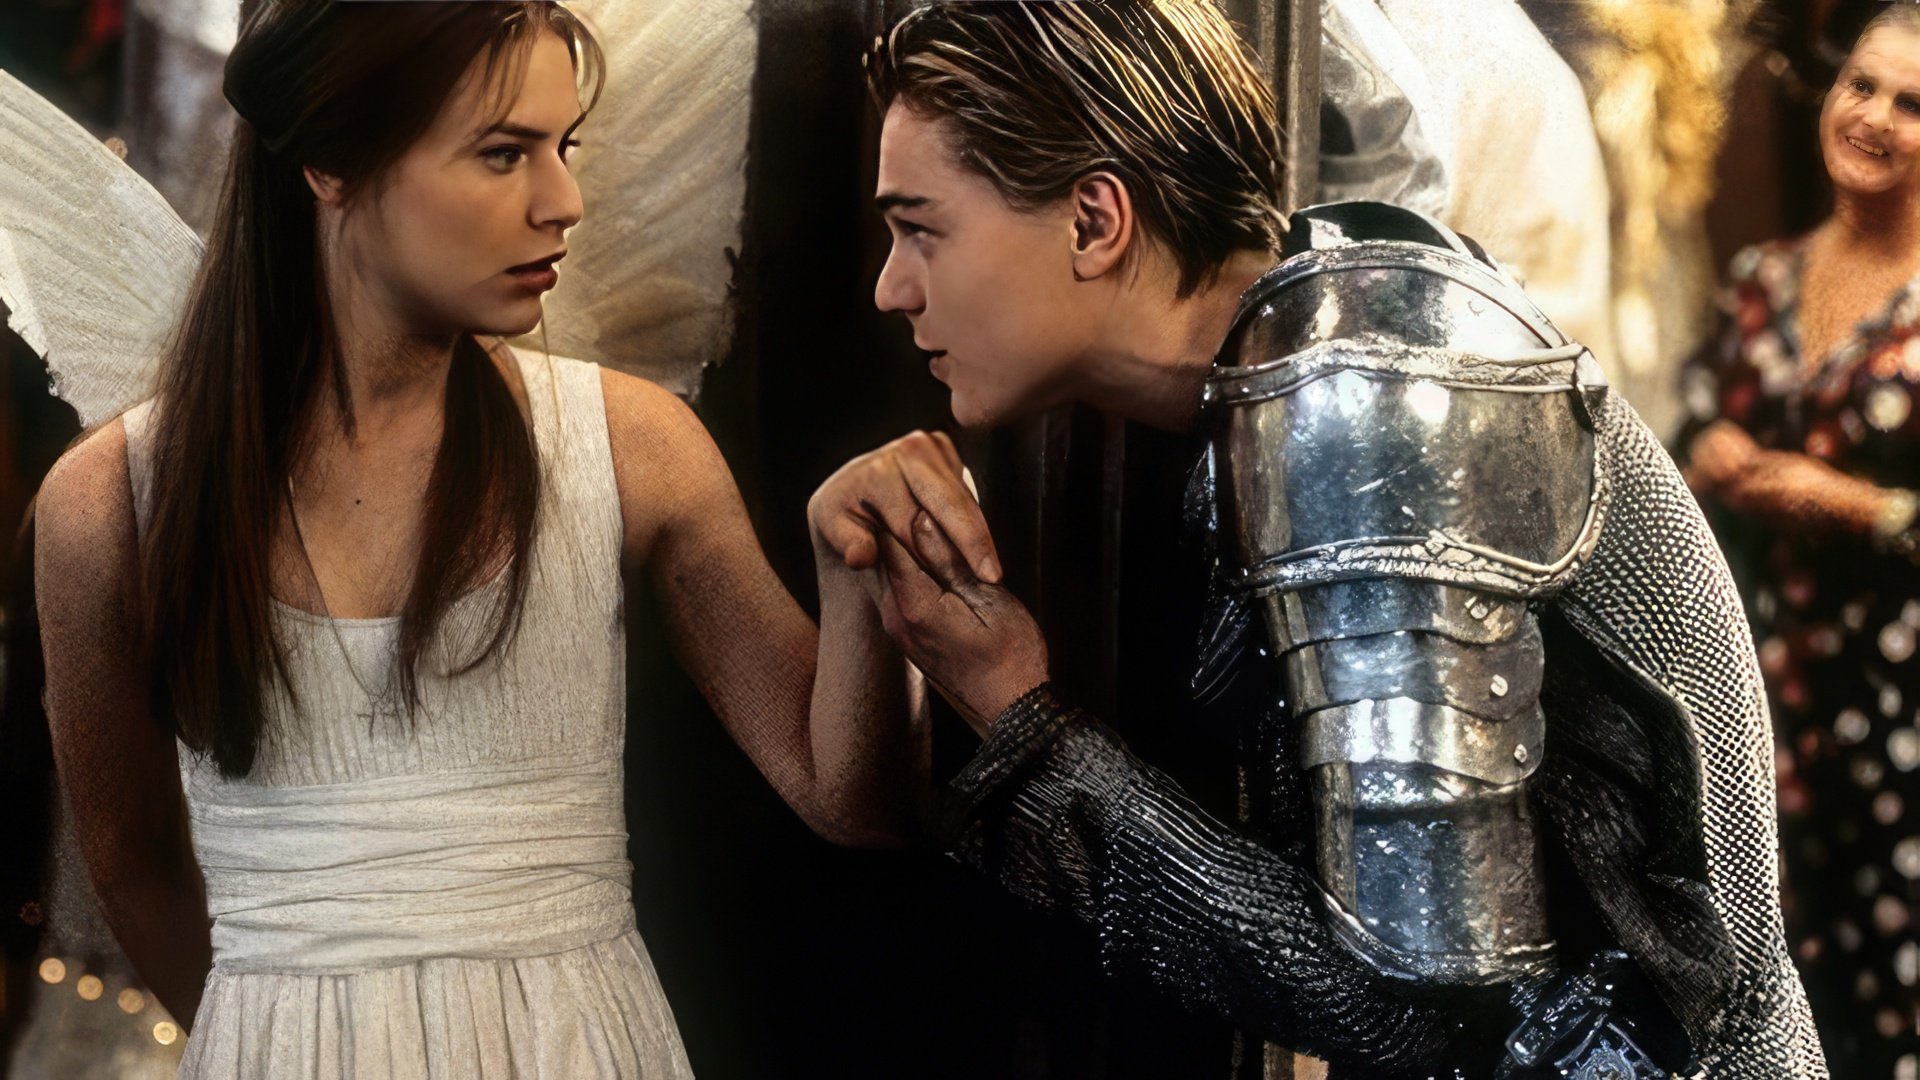 Leonardo DiCaprio and Claire Danes in the film 'Romeo + Juliet'